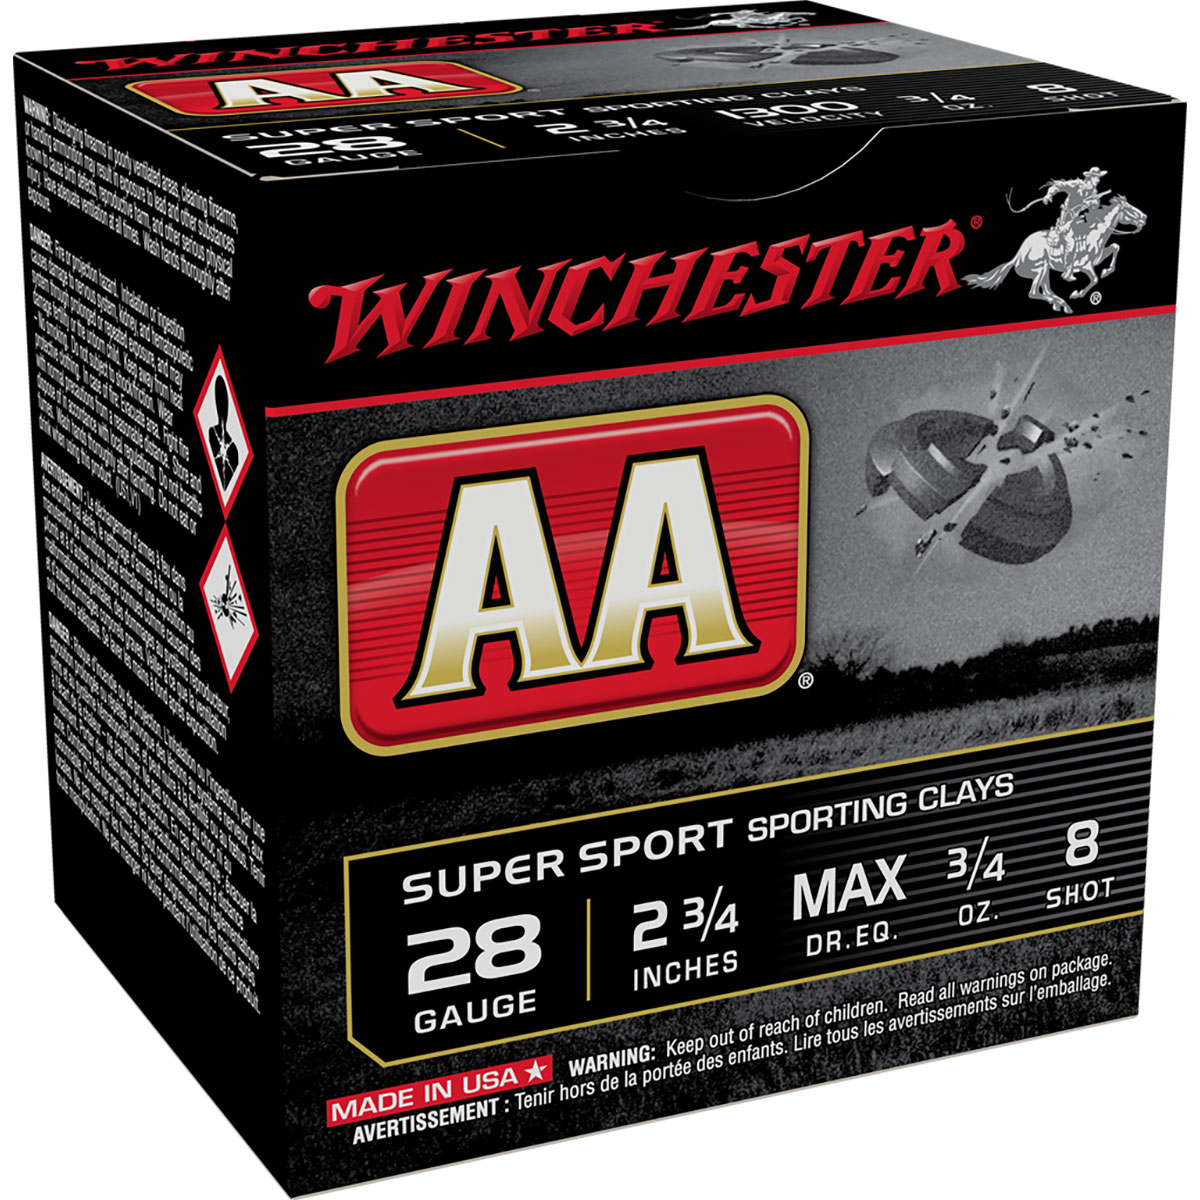 WINCHESTER - AA SUPER SPORT SPORTING CLAYS 28 GAUGE SHOTGUN AMMO